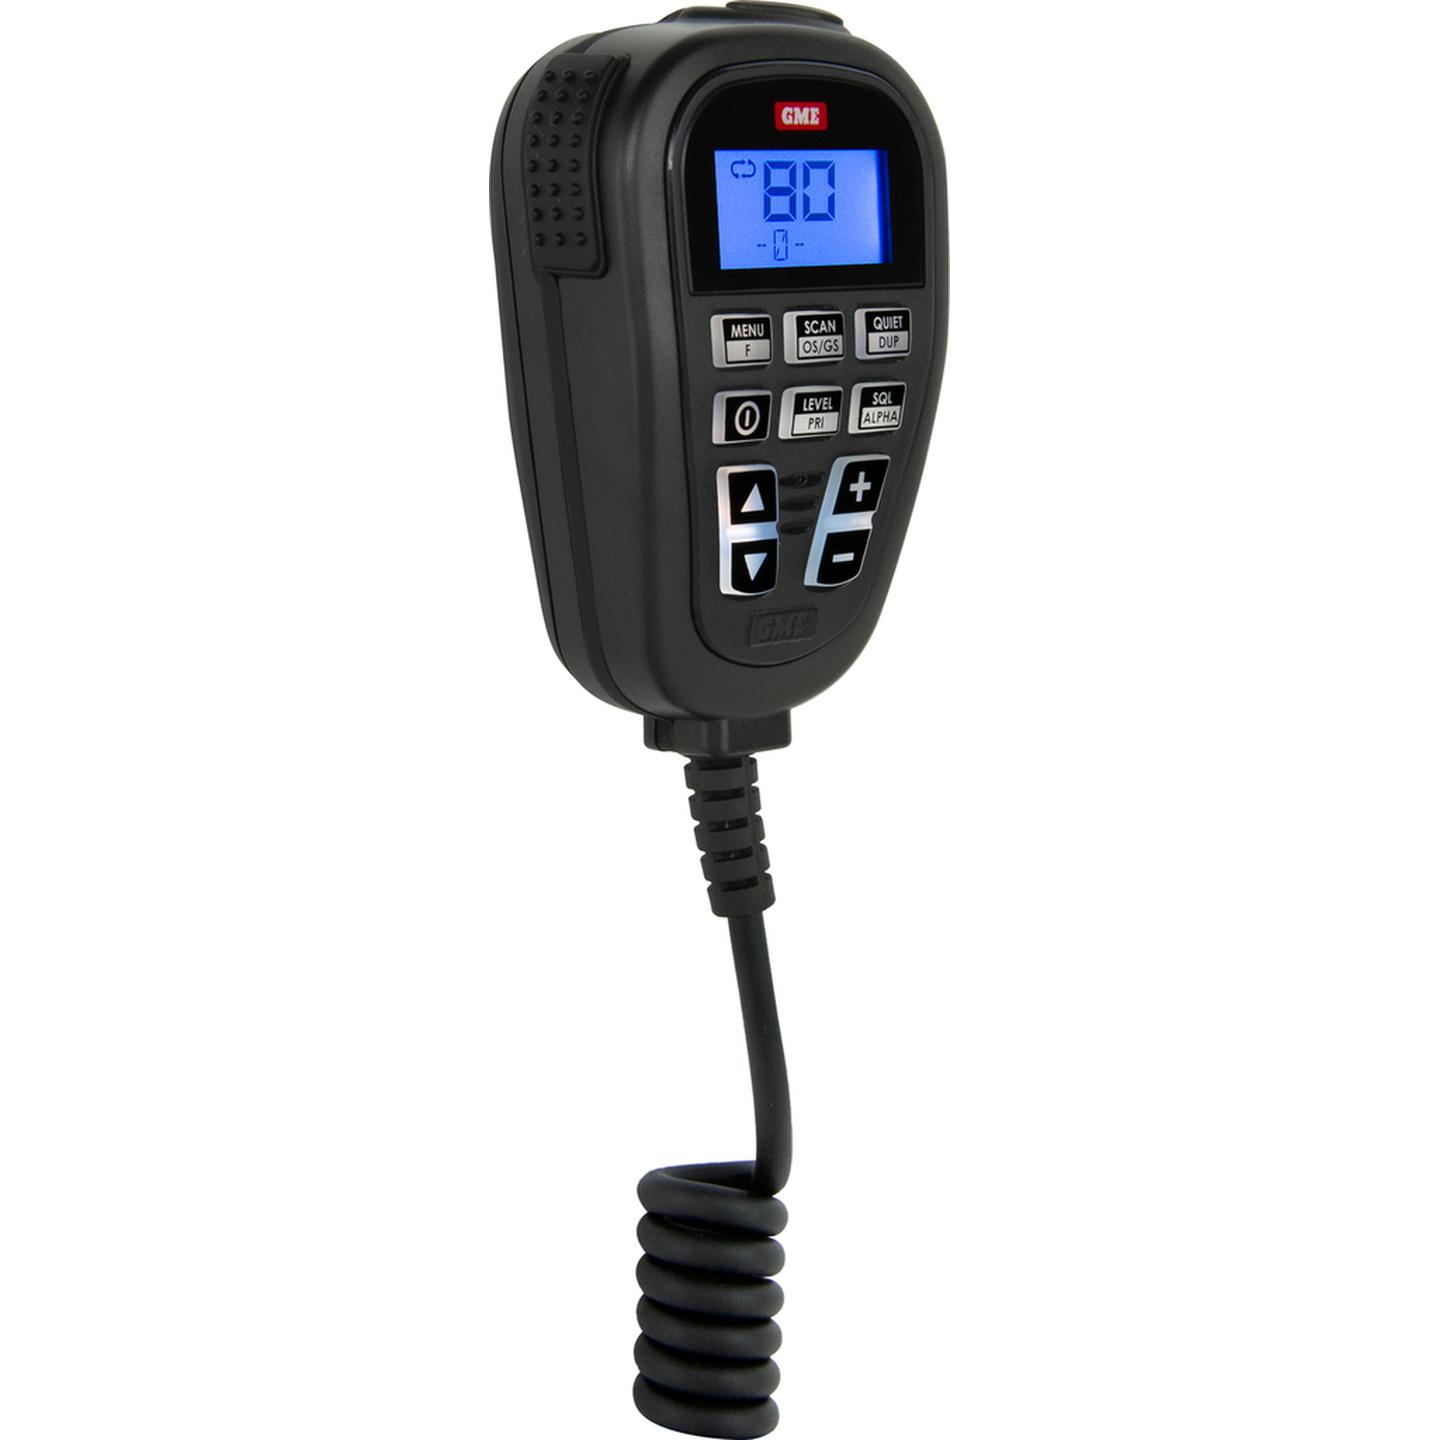 GME LCD Controller Microphone - Suit TX3340 / TX3345 / TX3540 / TX3540S / TX3440